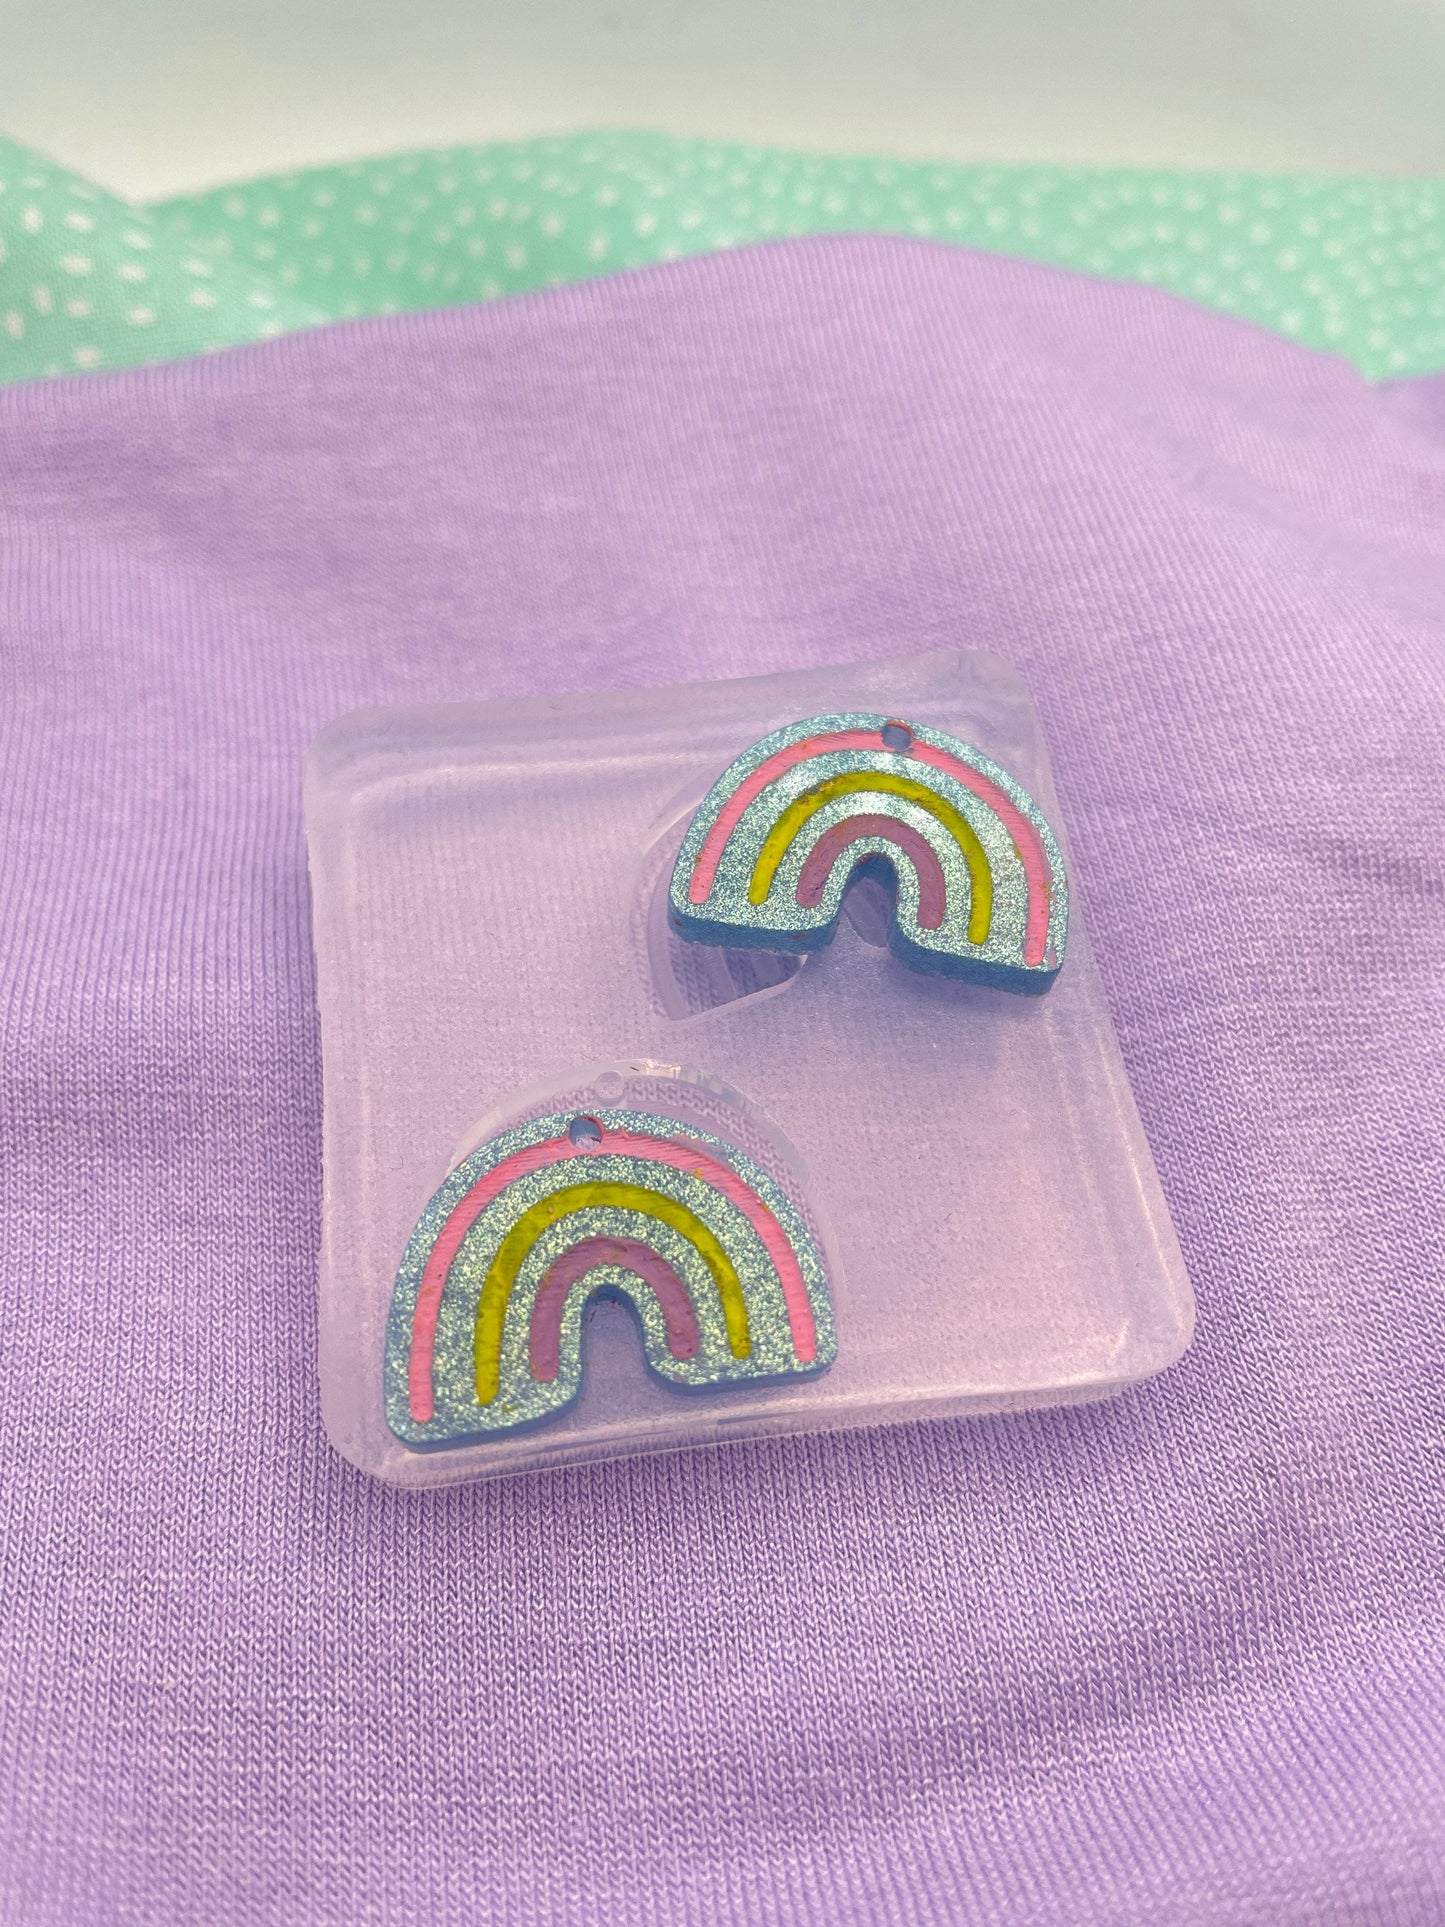 Small rainbow dangle earring mold